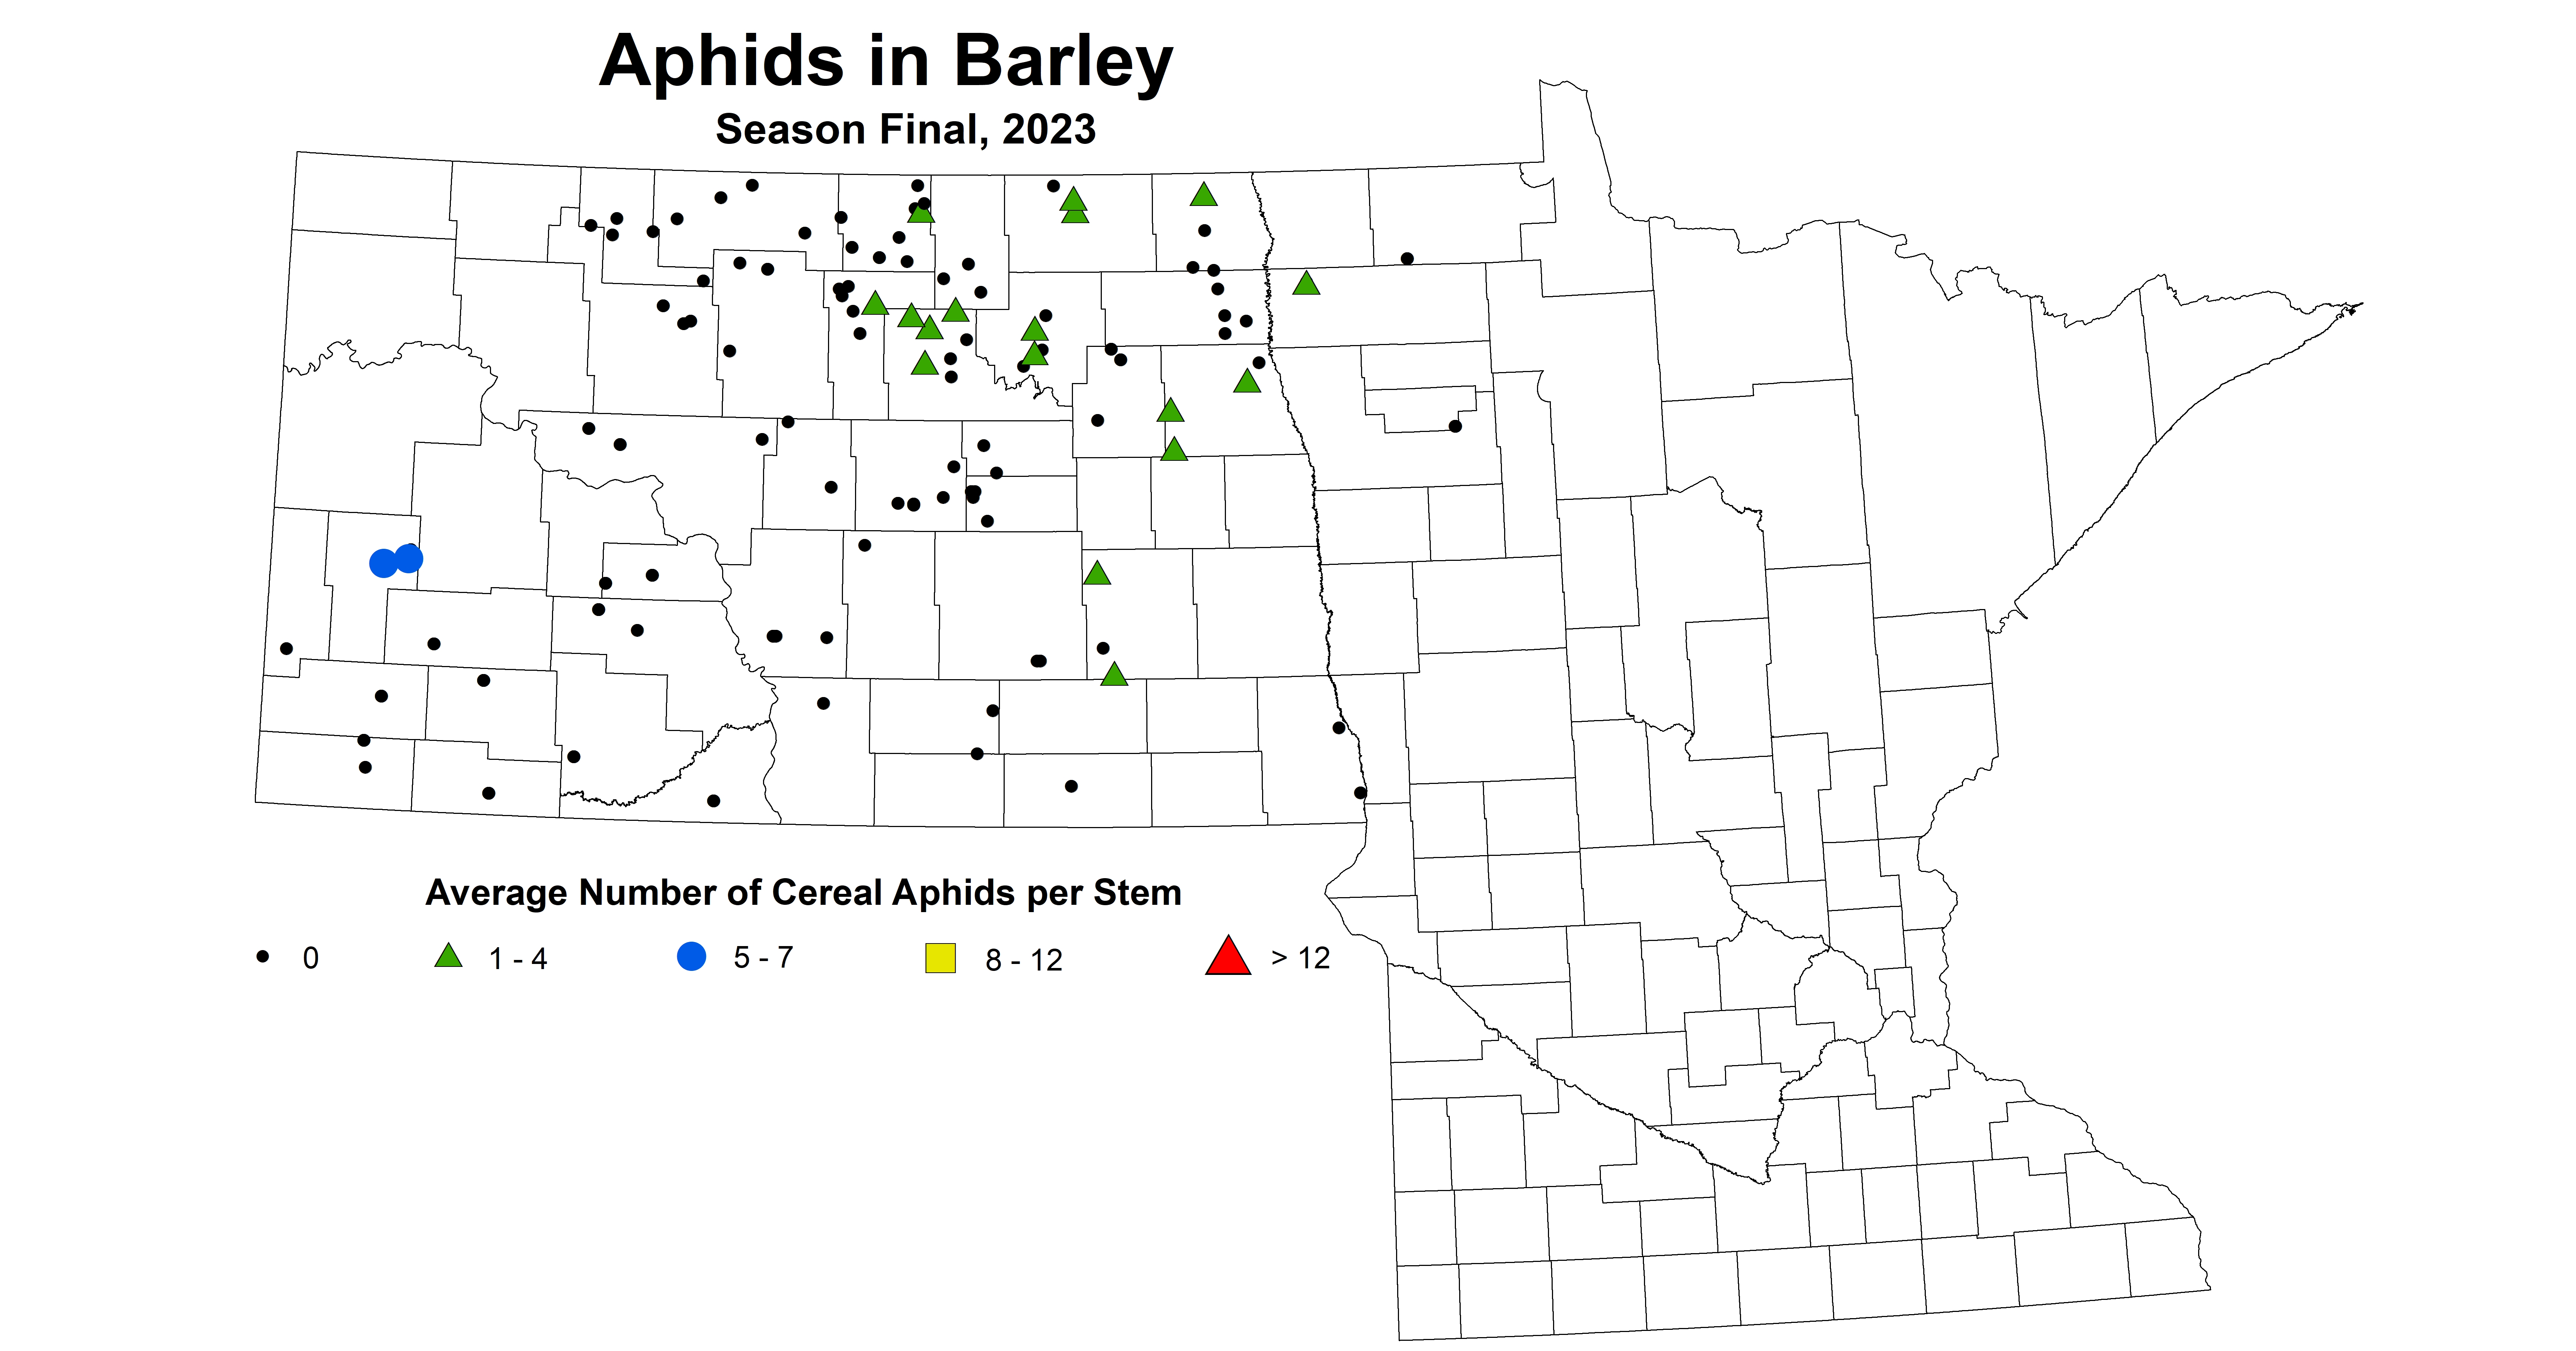 barley aphids season final 2023